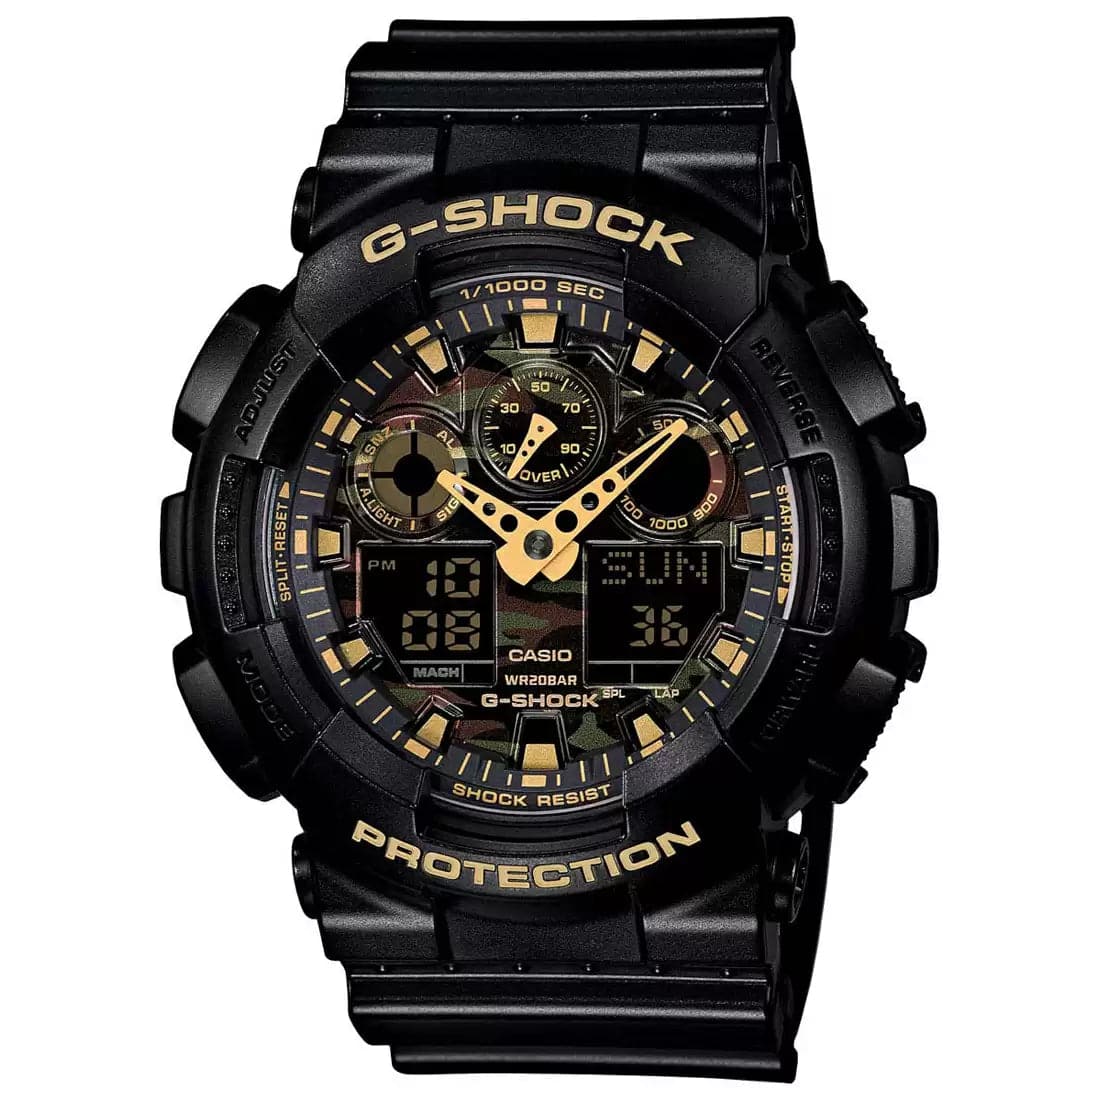 CASIO G-SHOCK WATCH G519 CASIO - Kamal Watch Company